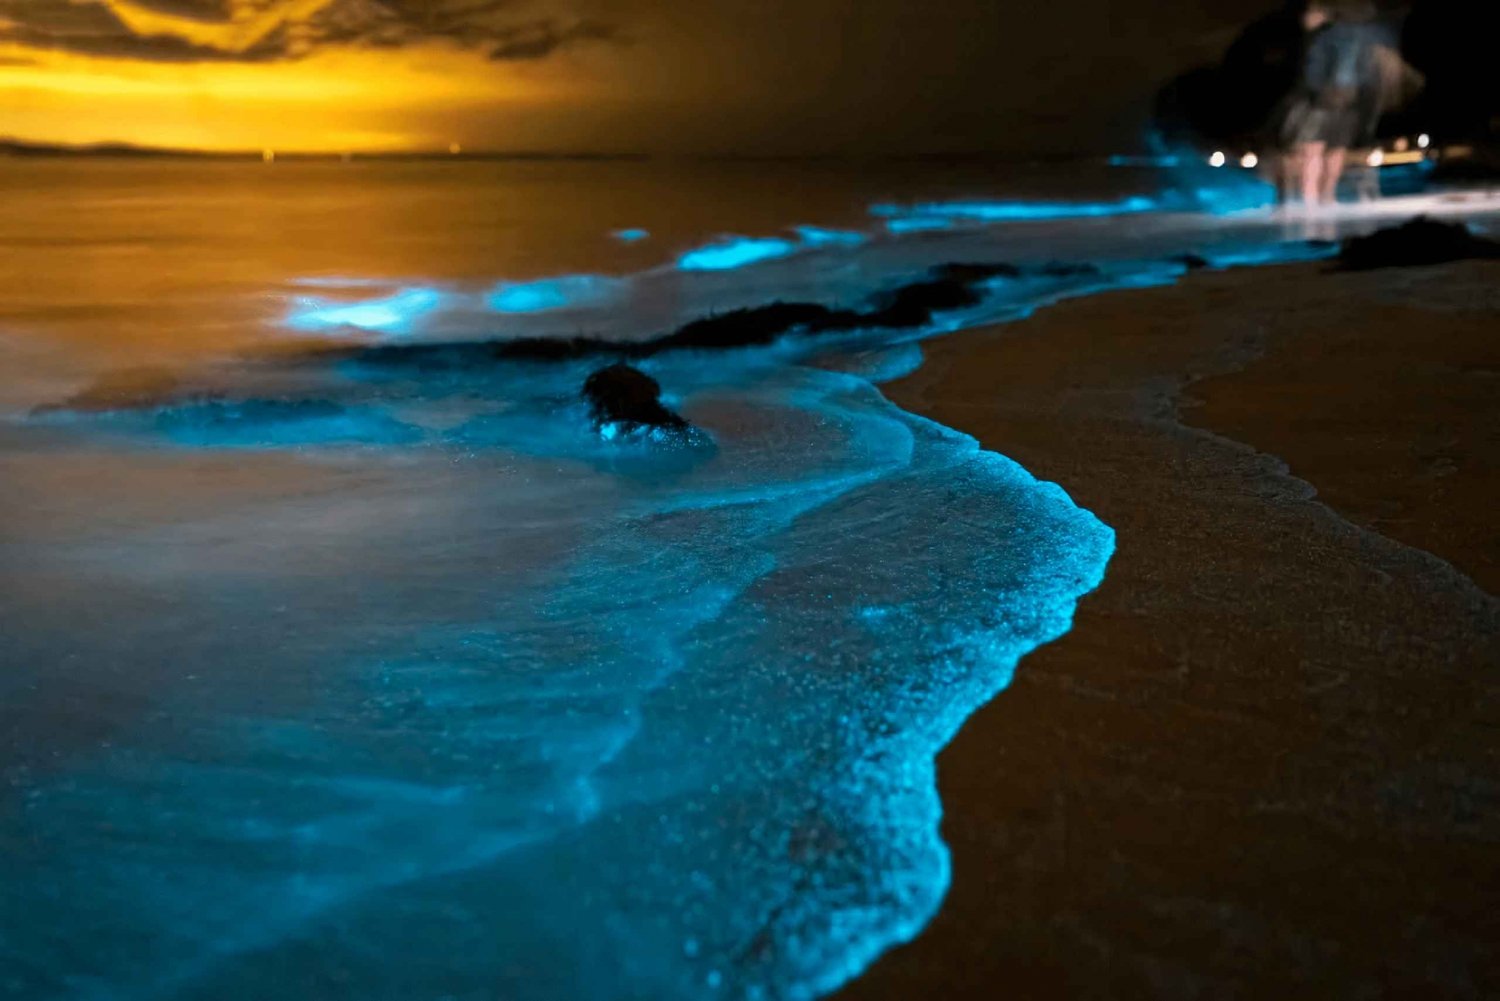 Phuket: Plancton bioluminescente e canoe di mare nella baia di Phang Nga